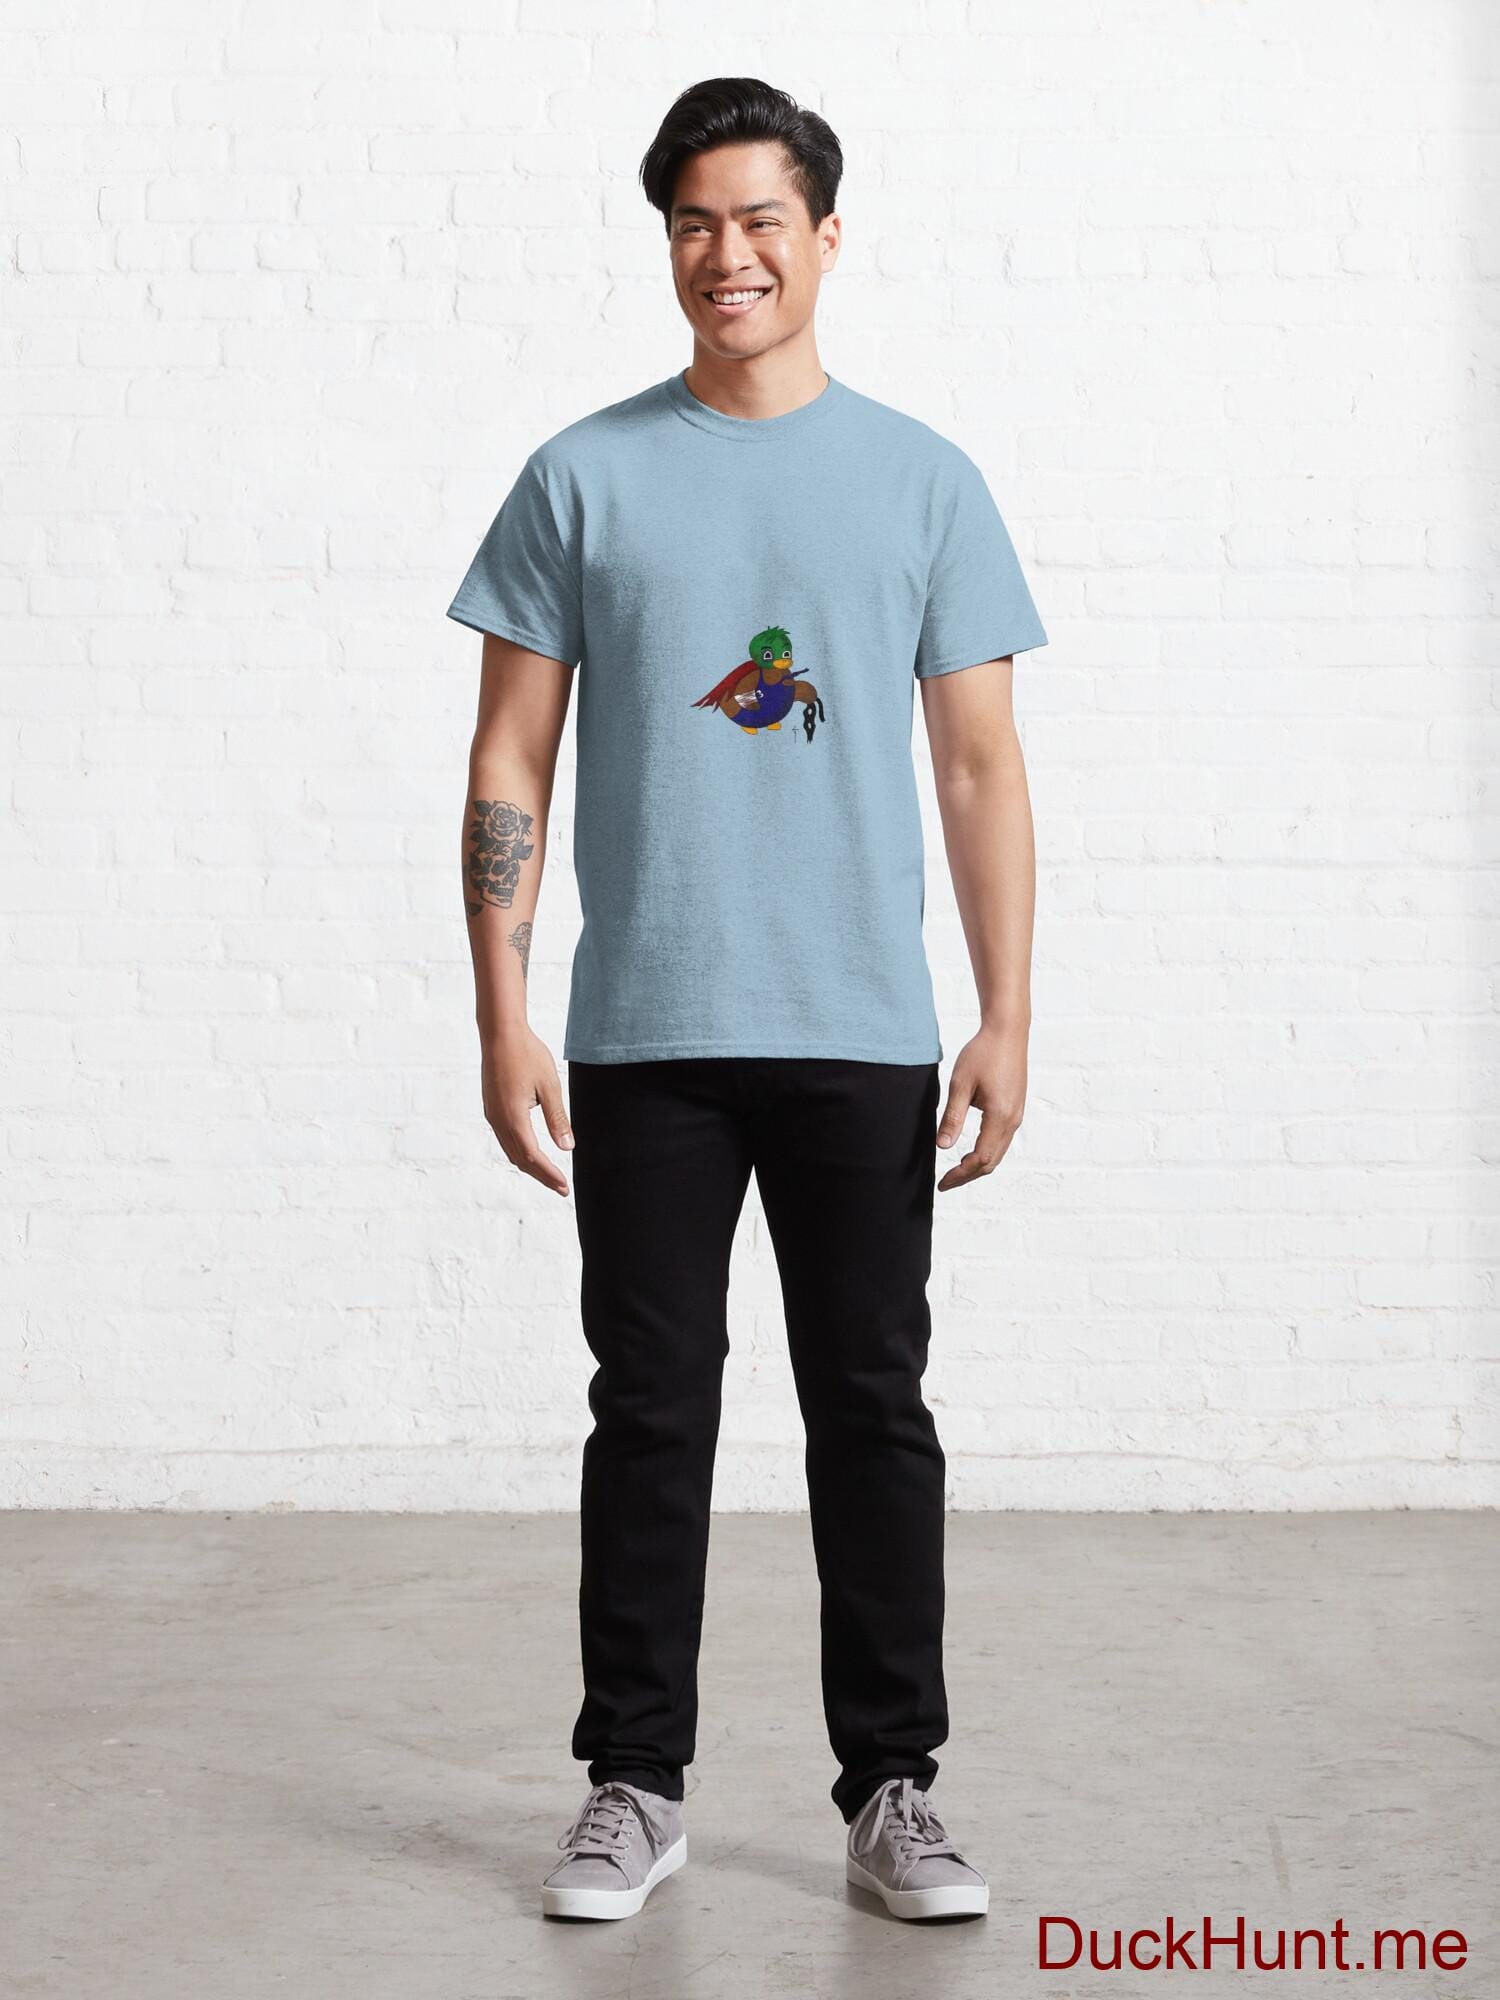 Dead DuckHunt Boss (smokeless) Light Blue Classic T-Shirt (Front printed) alternative image 6